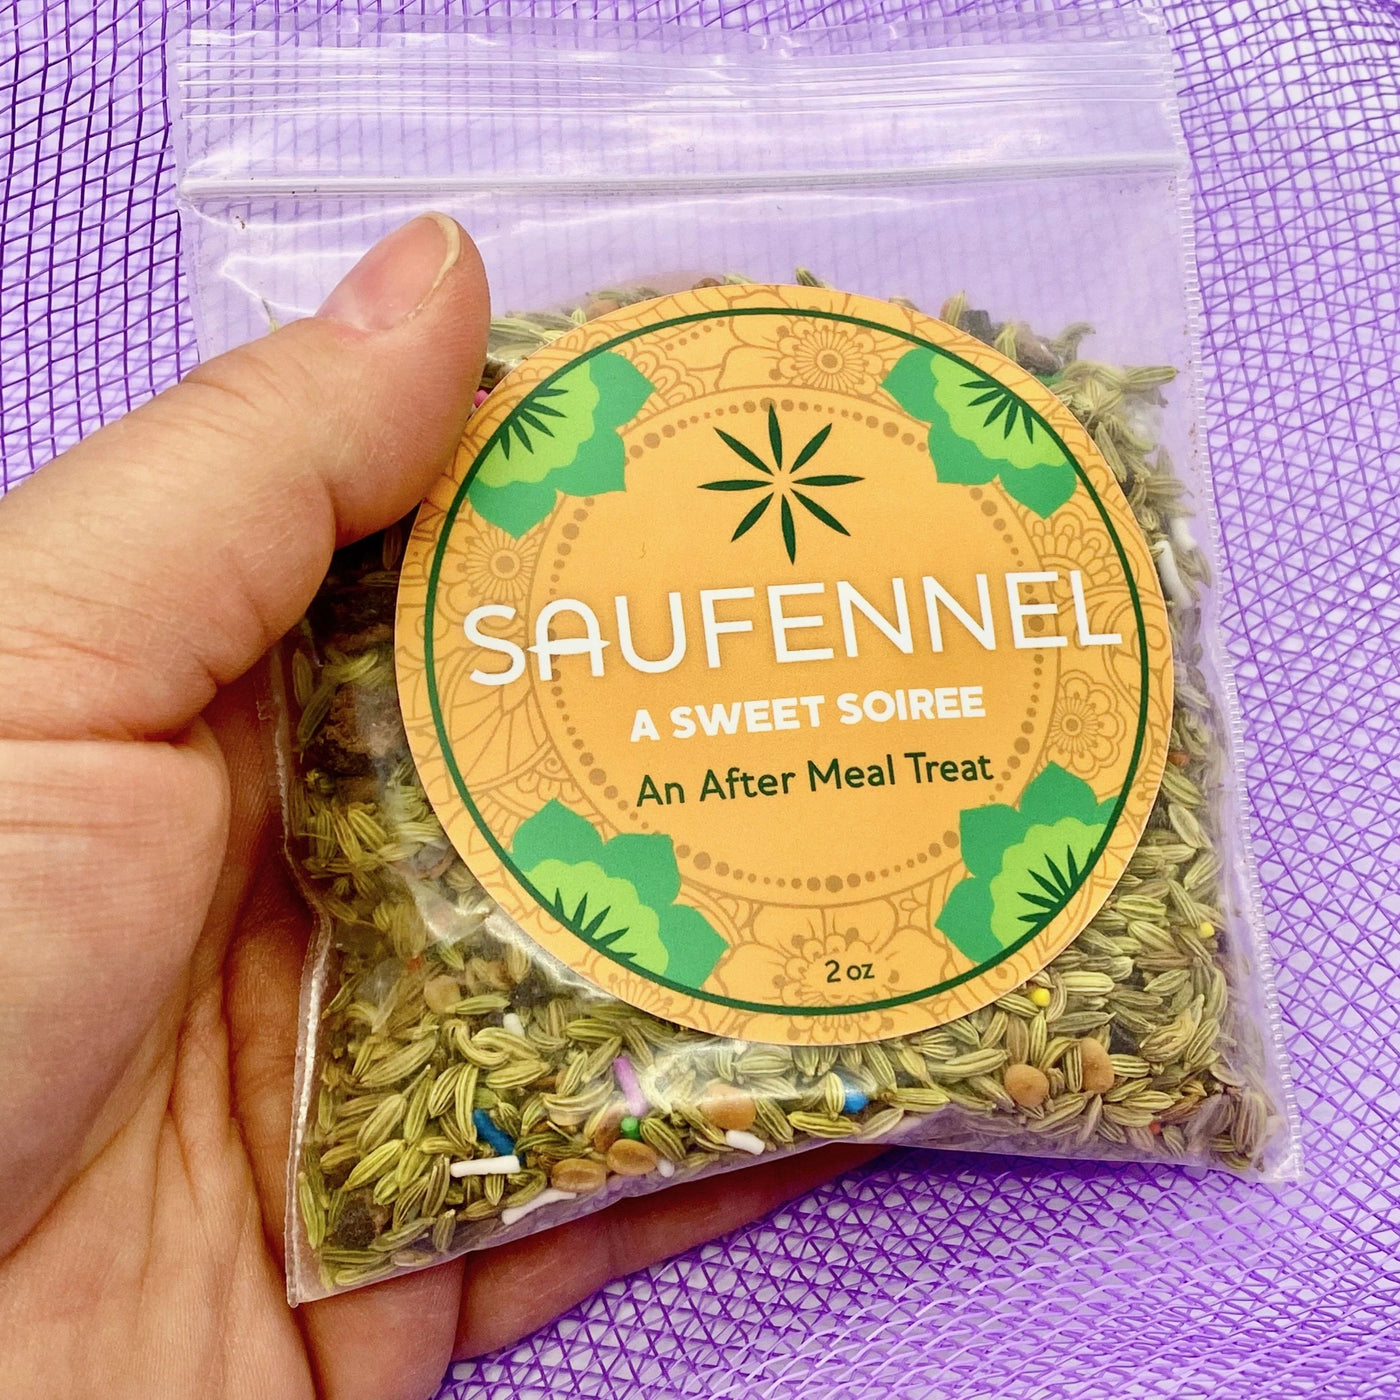 Nut free mix by Saufennel